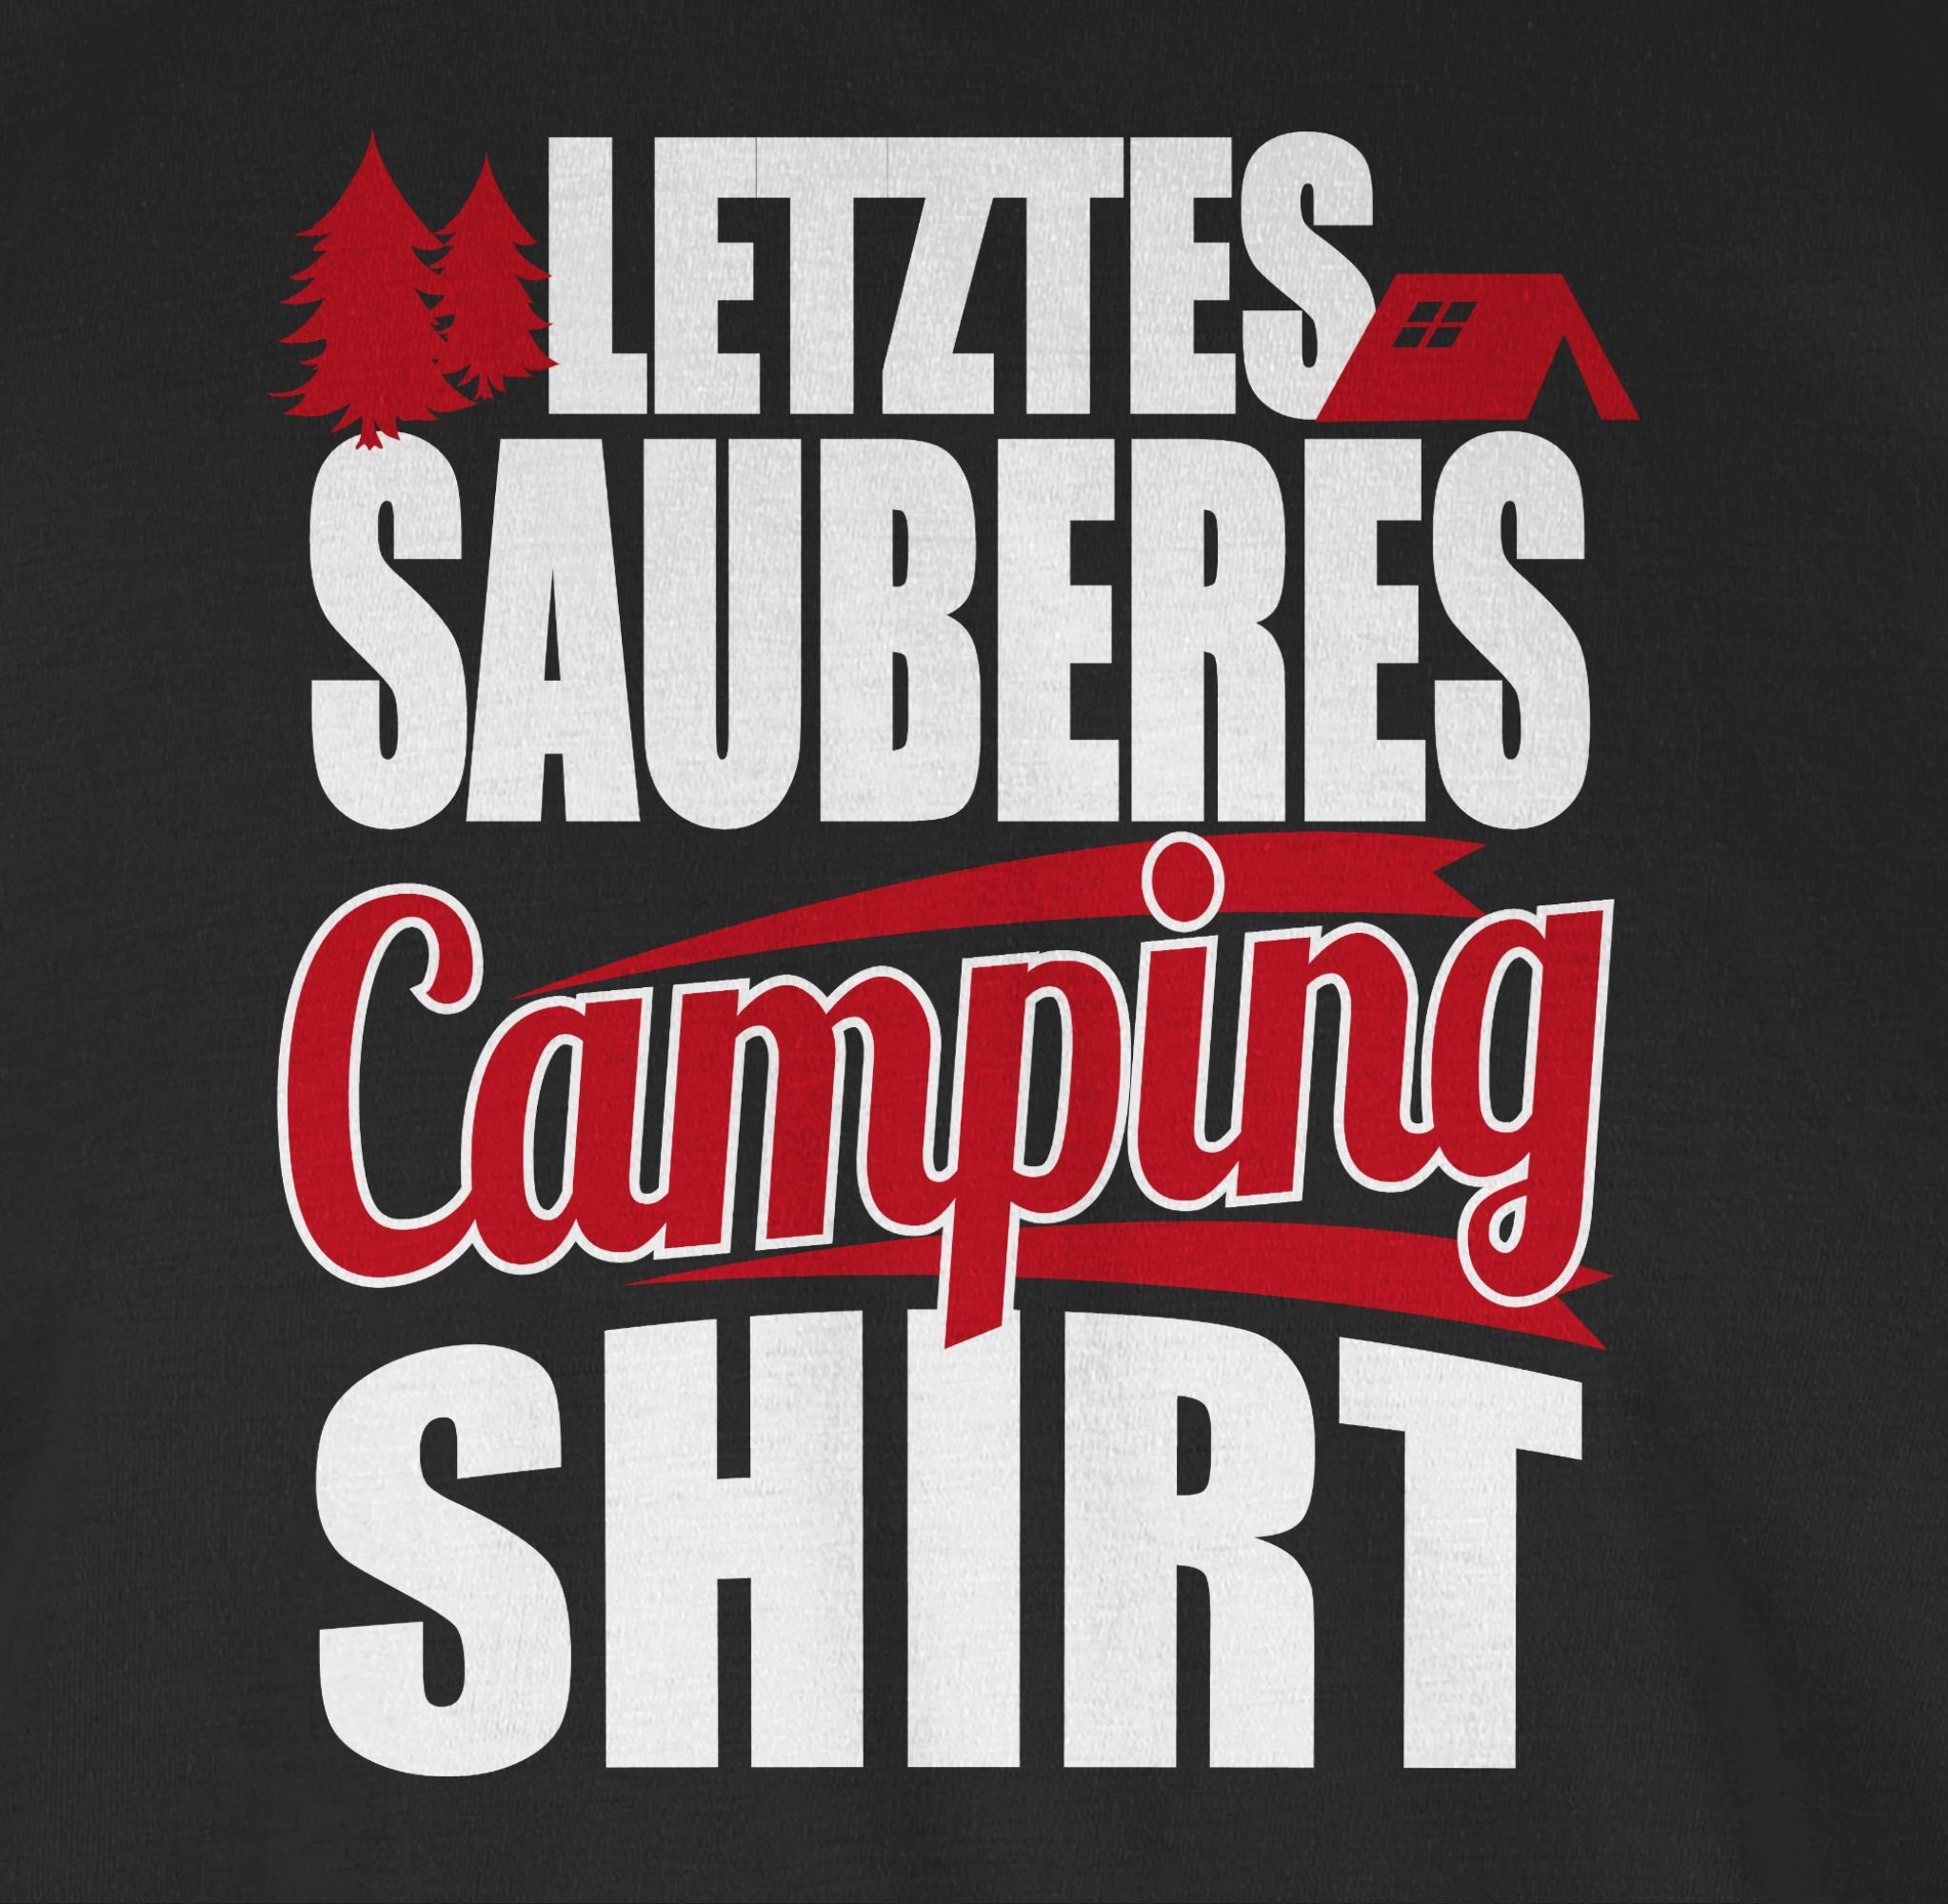 Shirtracer T-Shirt Hobby Outfit sauberes Letztes Camping Shirt 1 Schwarz